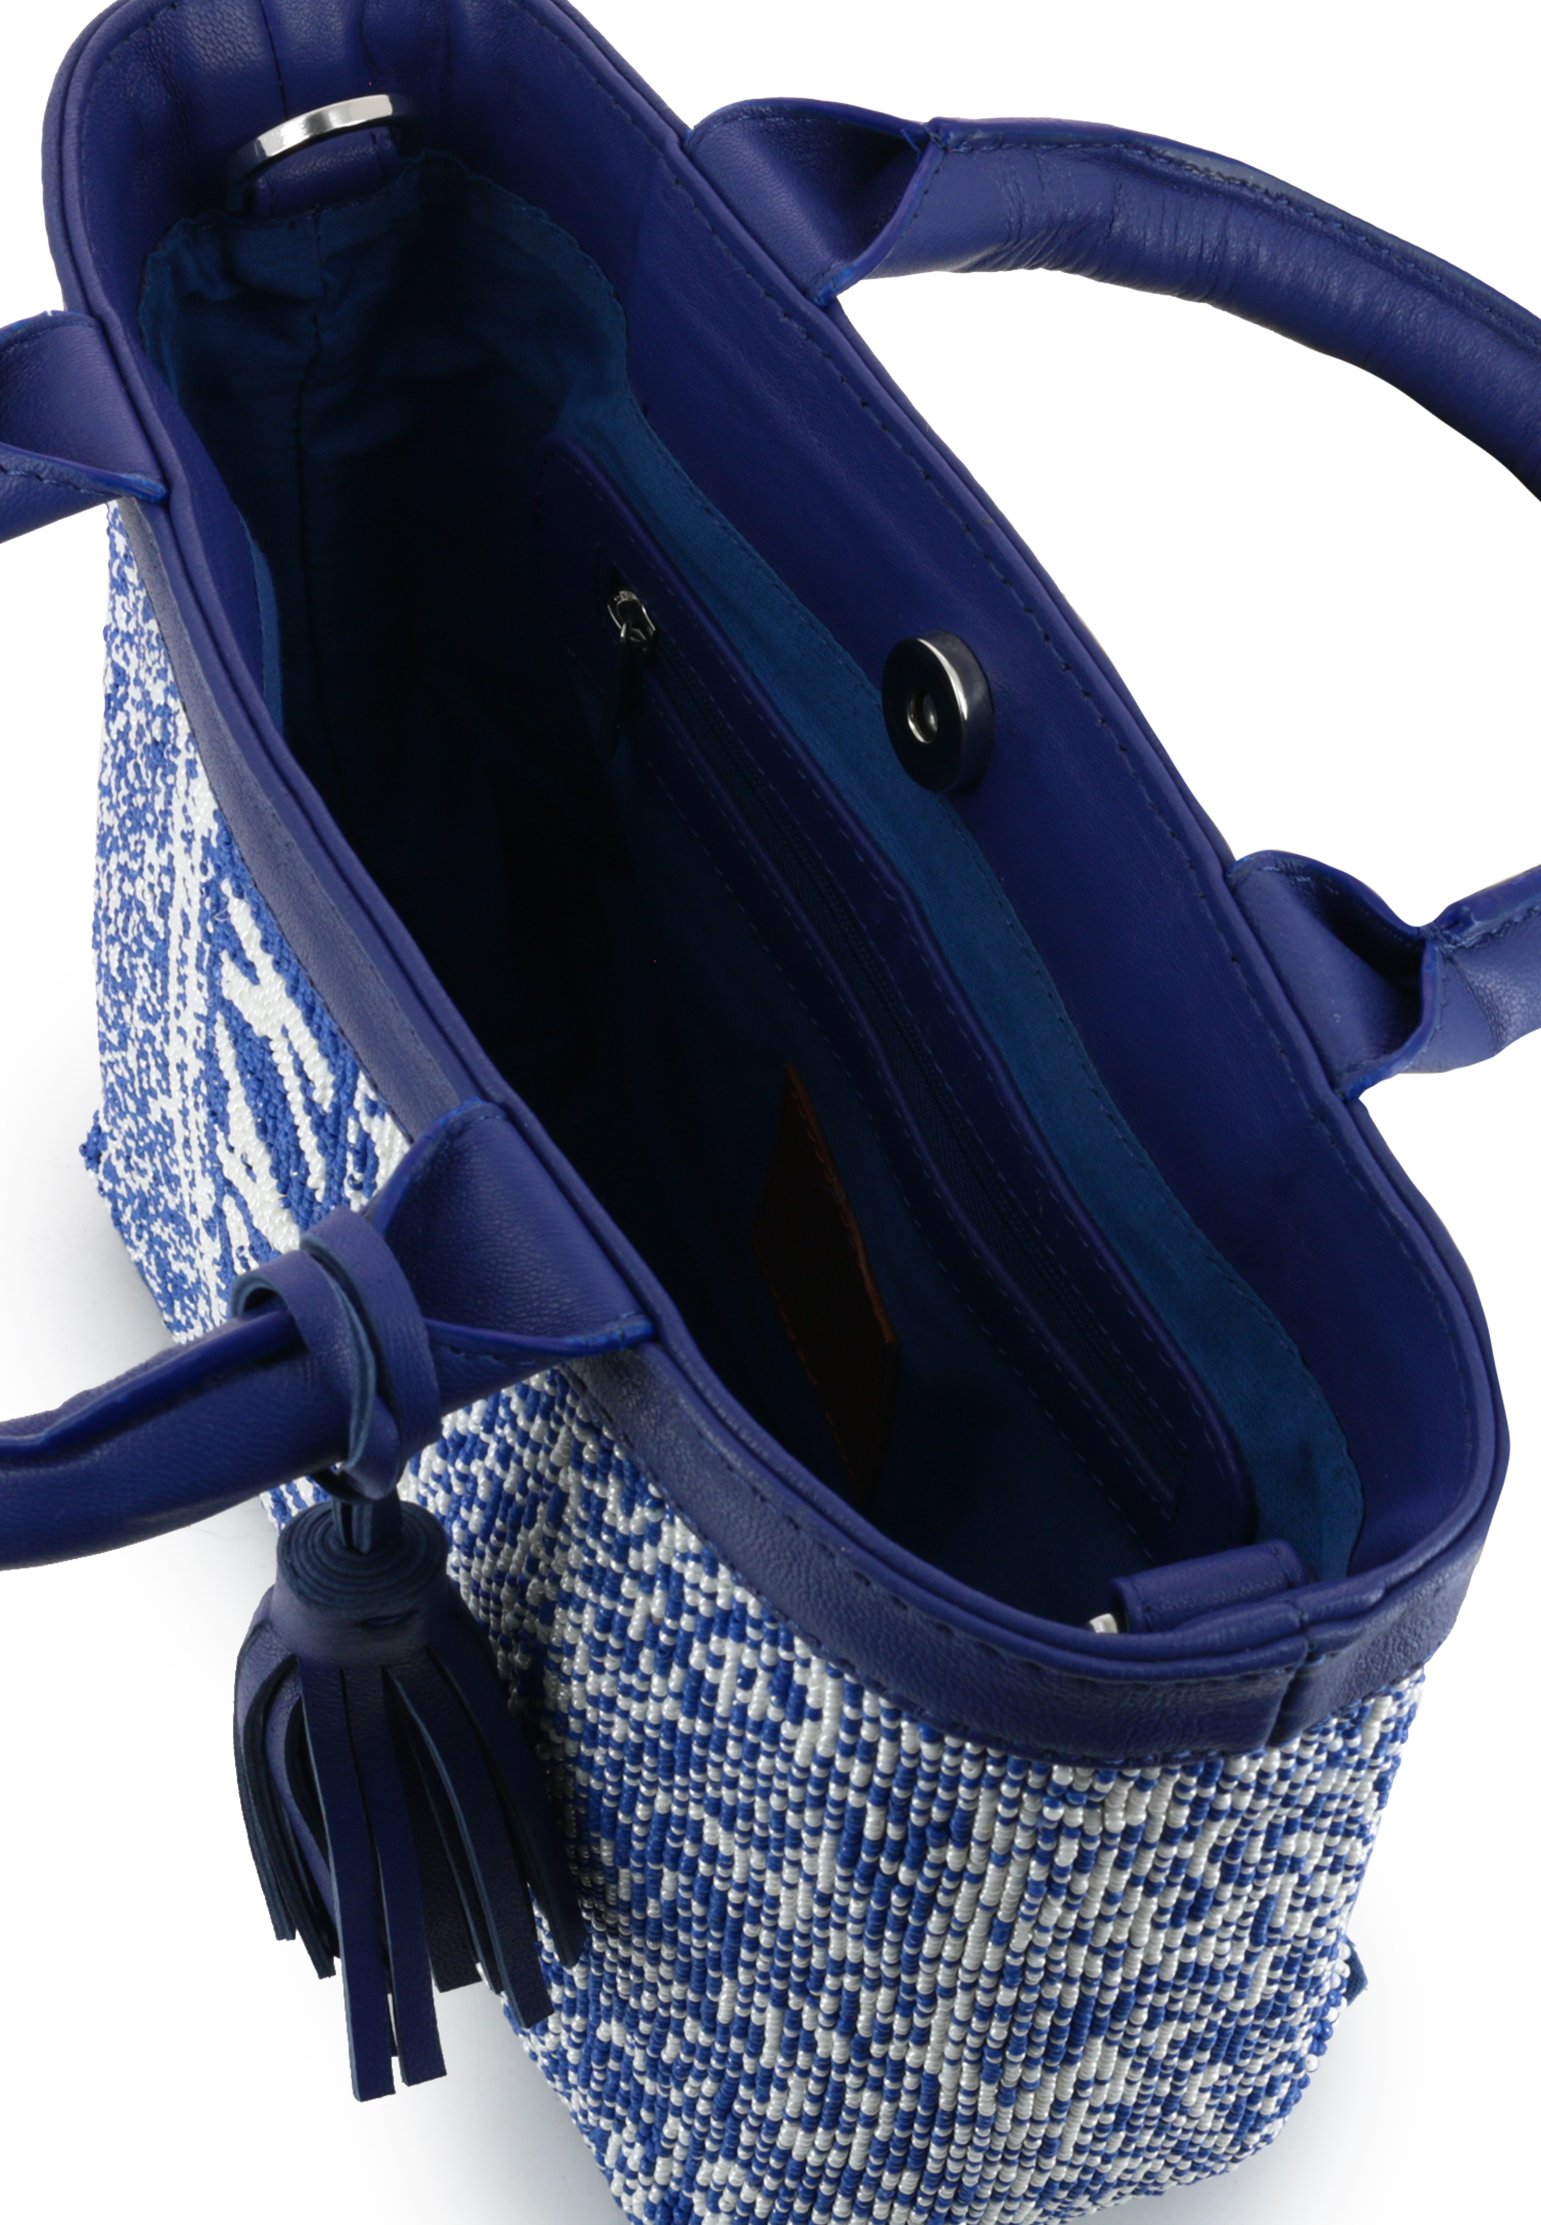 Bag DE SIENA Color: blue (Code: 2334) in online store Allure